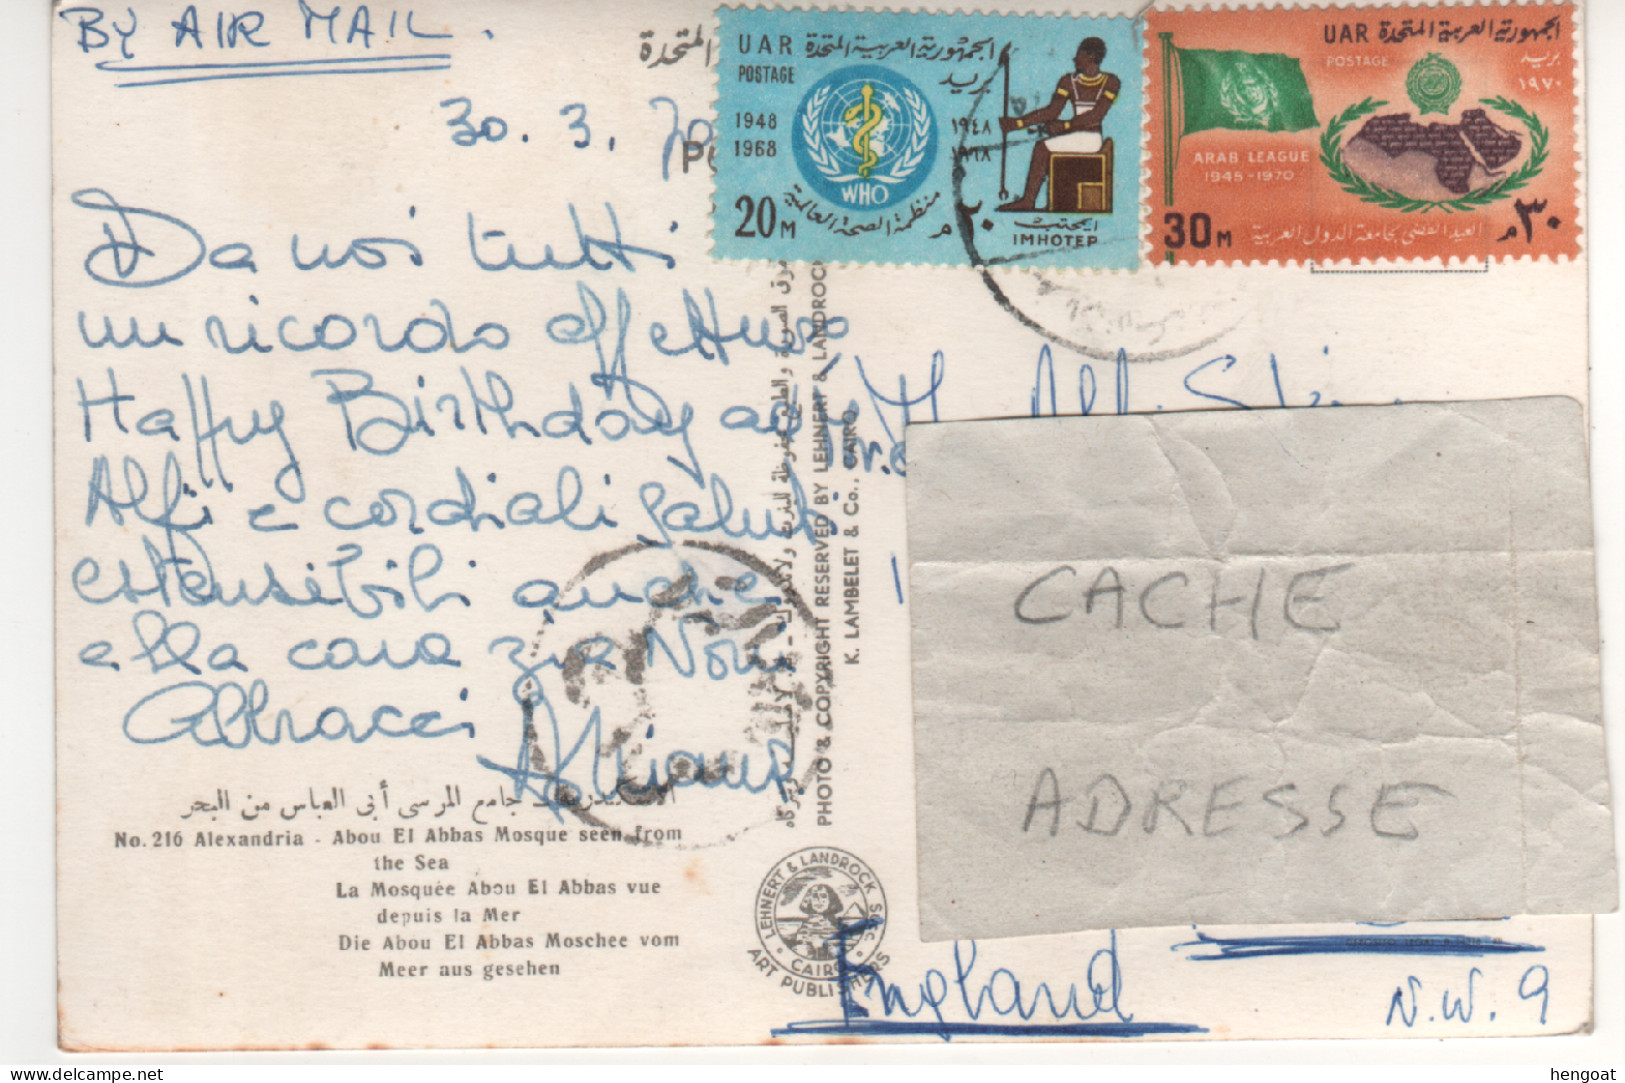 Timbres , Stamps " 1948 -1968 WHO , Imhotep ; 1945 - 1970 Ligue Arabe " Sur CP , Carte , Postcard Du 30/03/70 - Cartas & Documentos